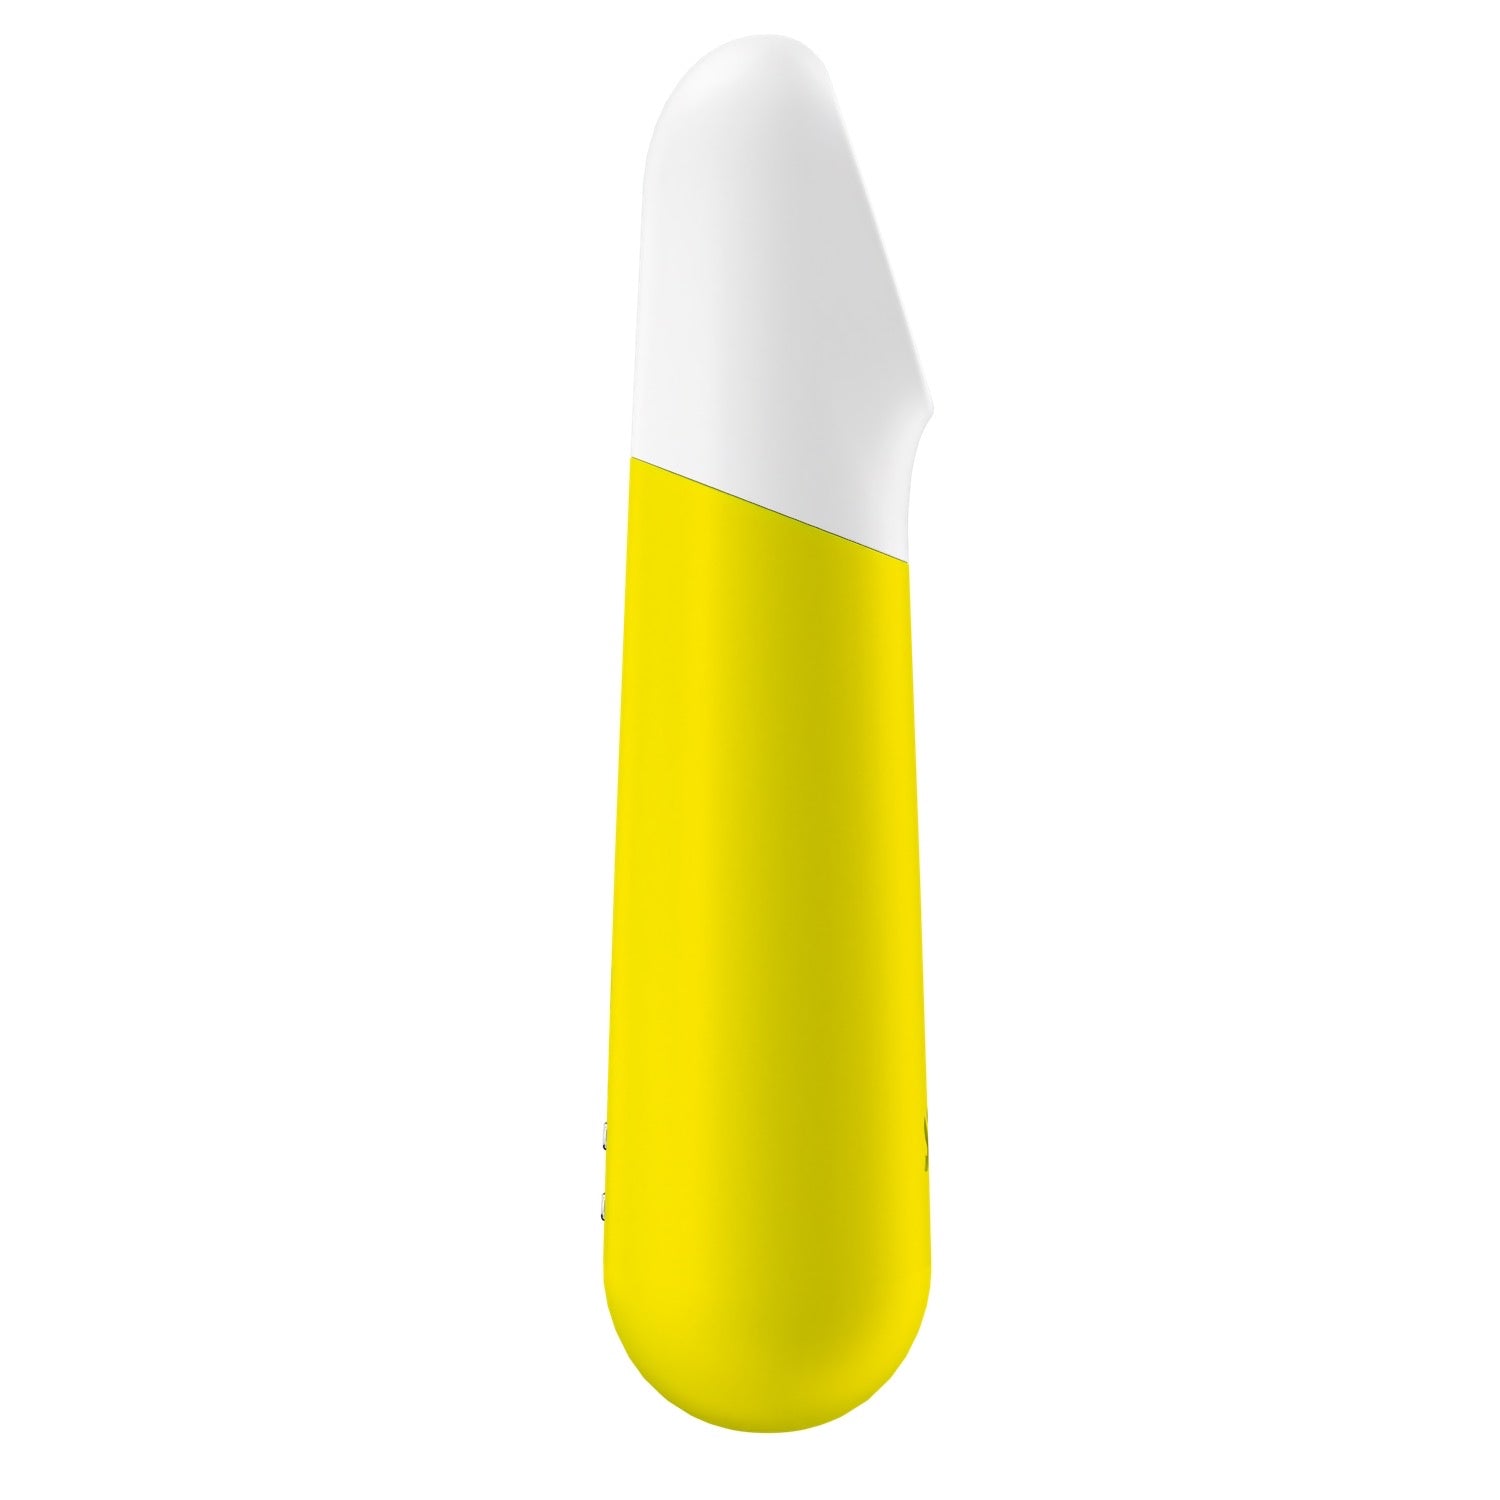 Satisfyer Ultra Power Bullet 4 - Yellow by Satisfyer